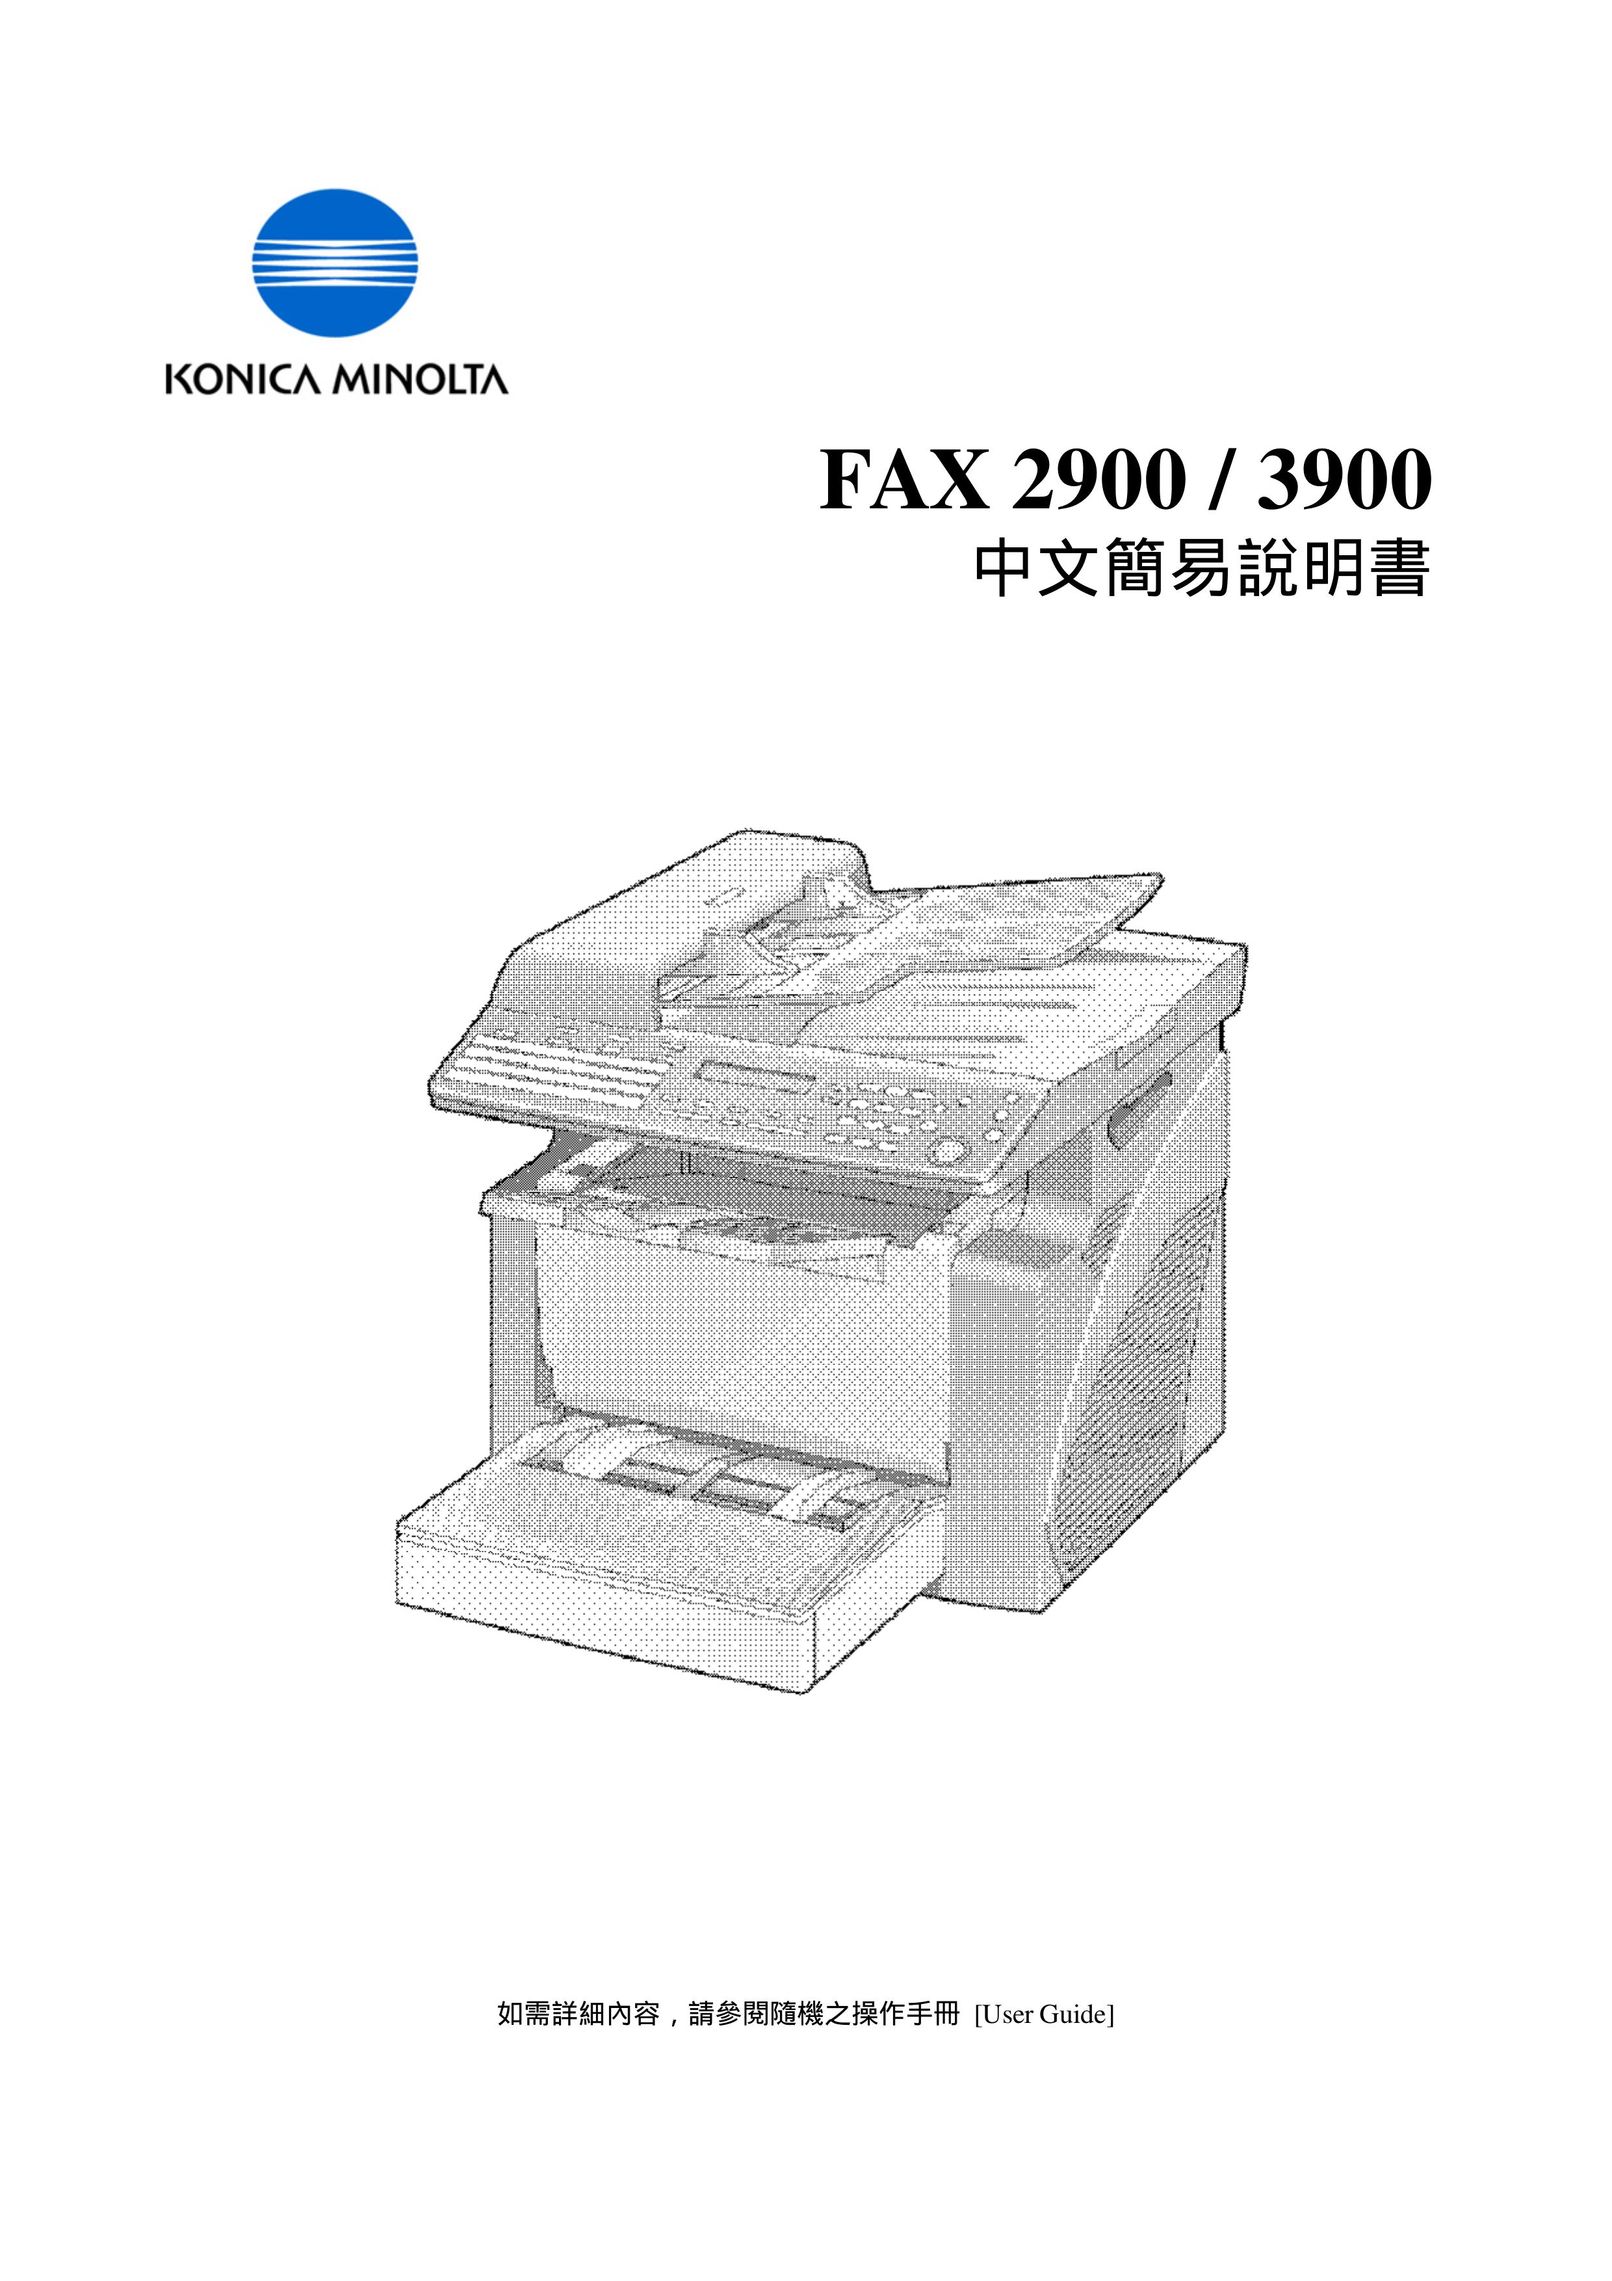 Konica Minolta 2900 All in One Printer User Manual